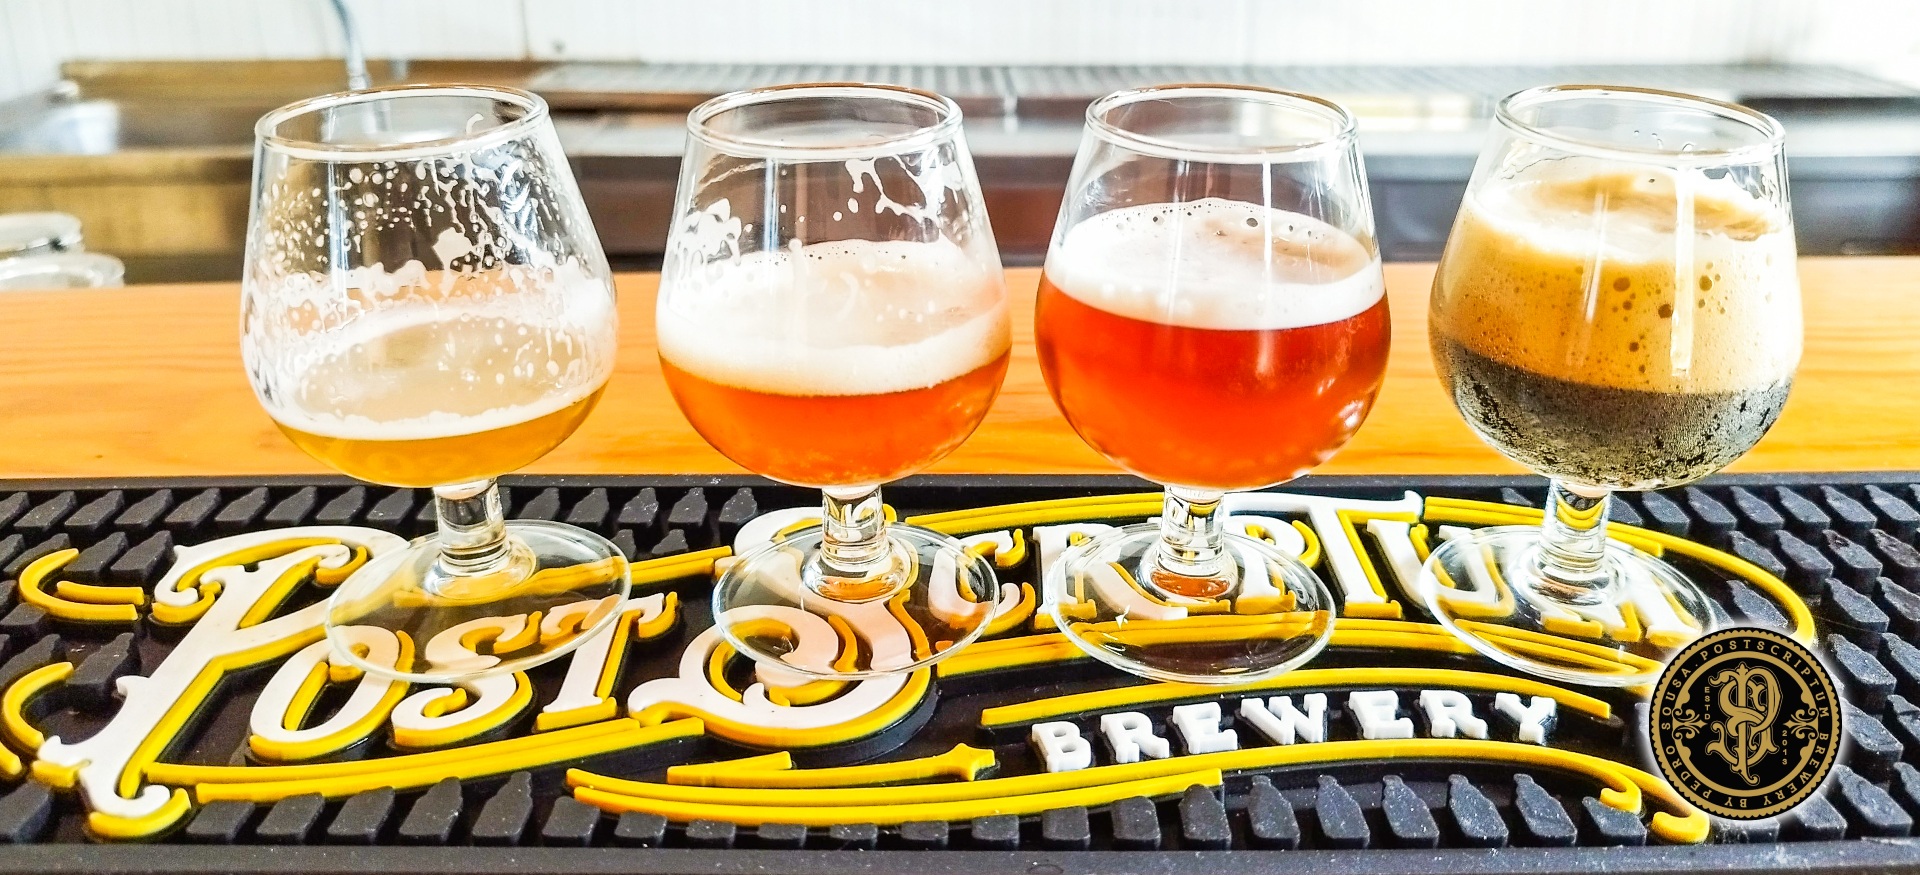 Craft beer tasting glasses | Post Scriptum Brewery from Alvarelhos, Portugal | Craft Beer Nomads